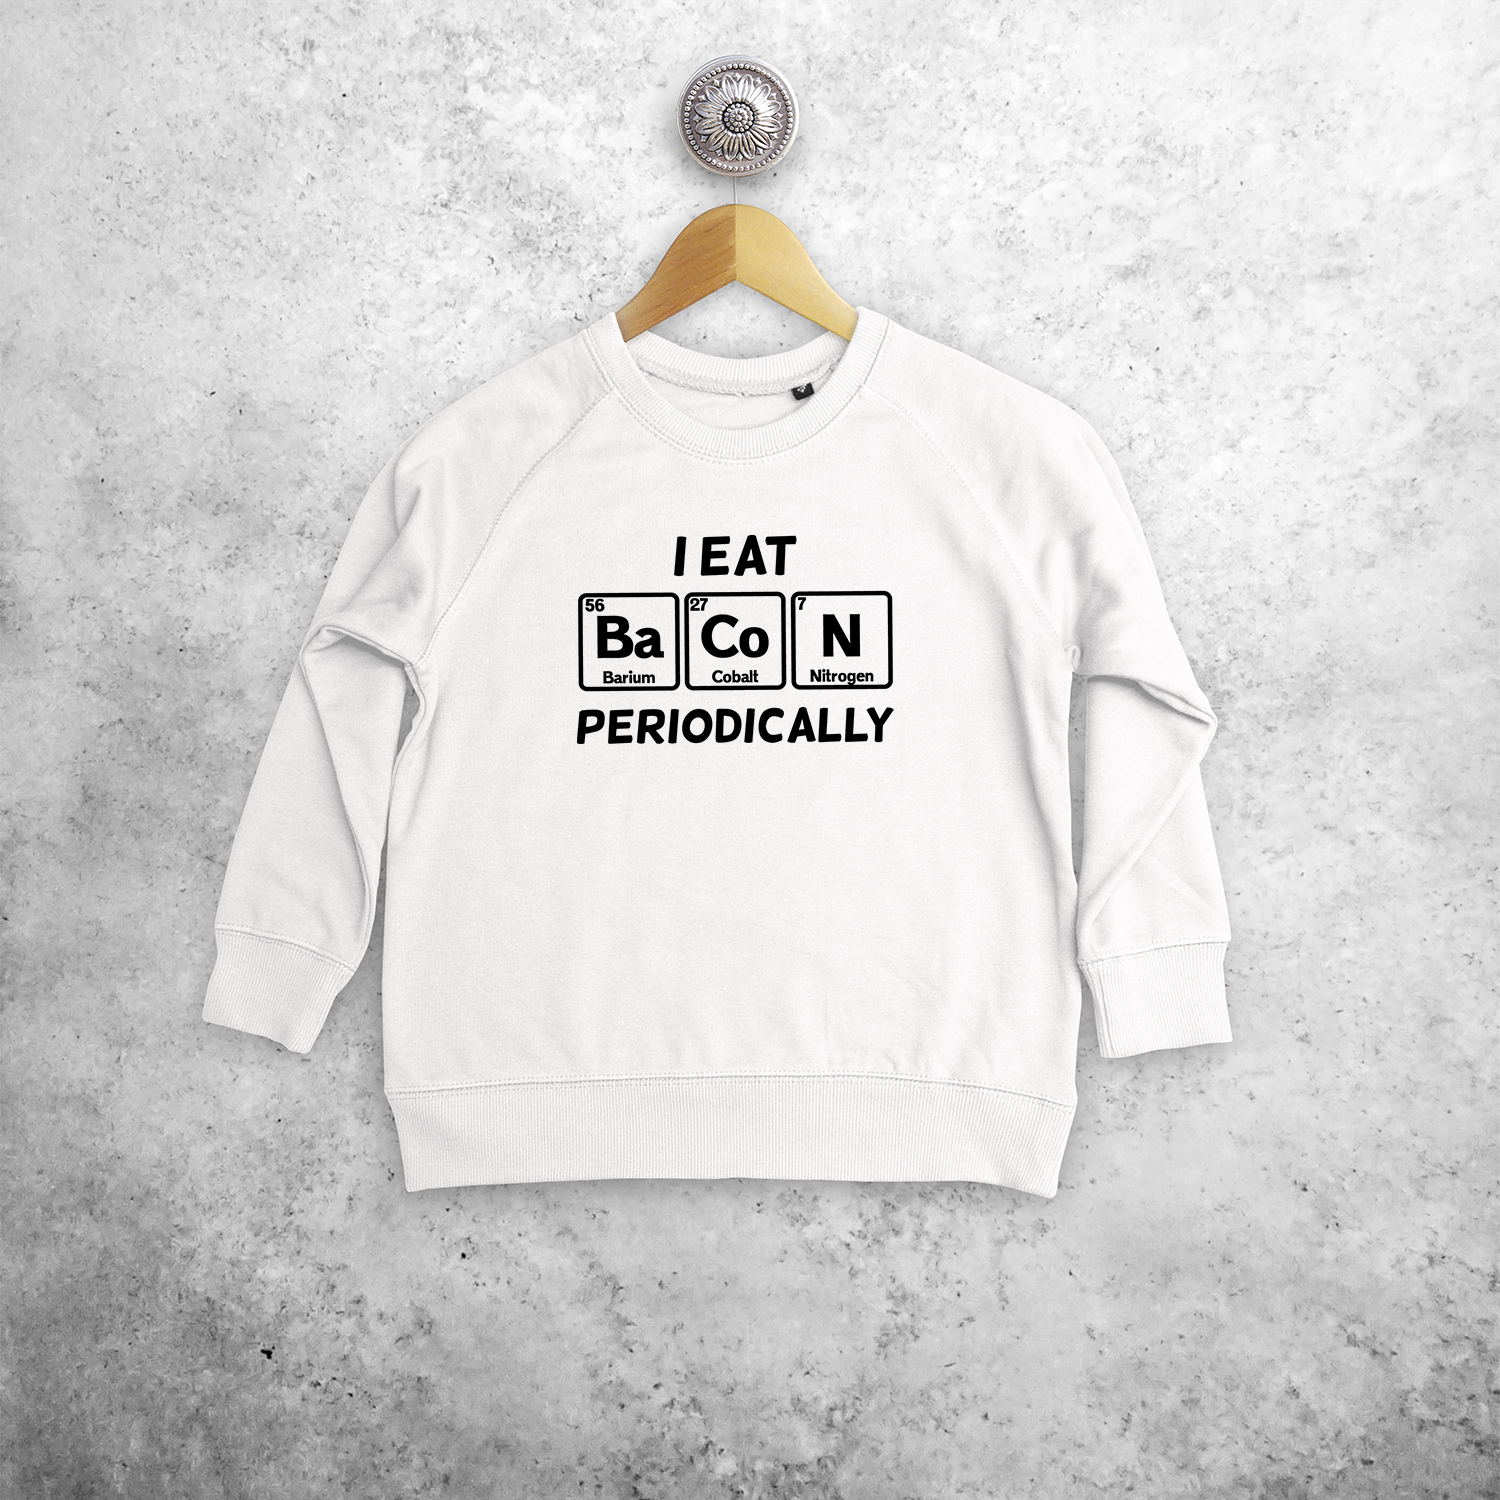 'I eat bacon periodically' kids sweater